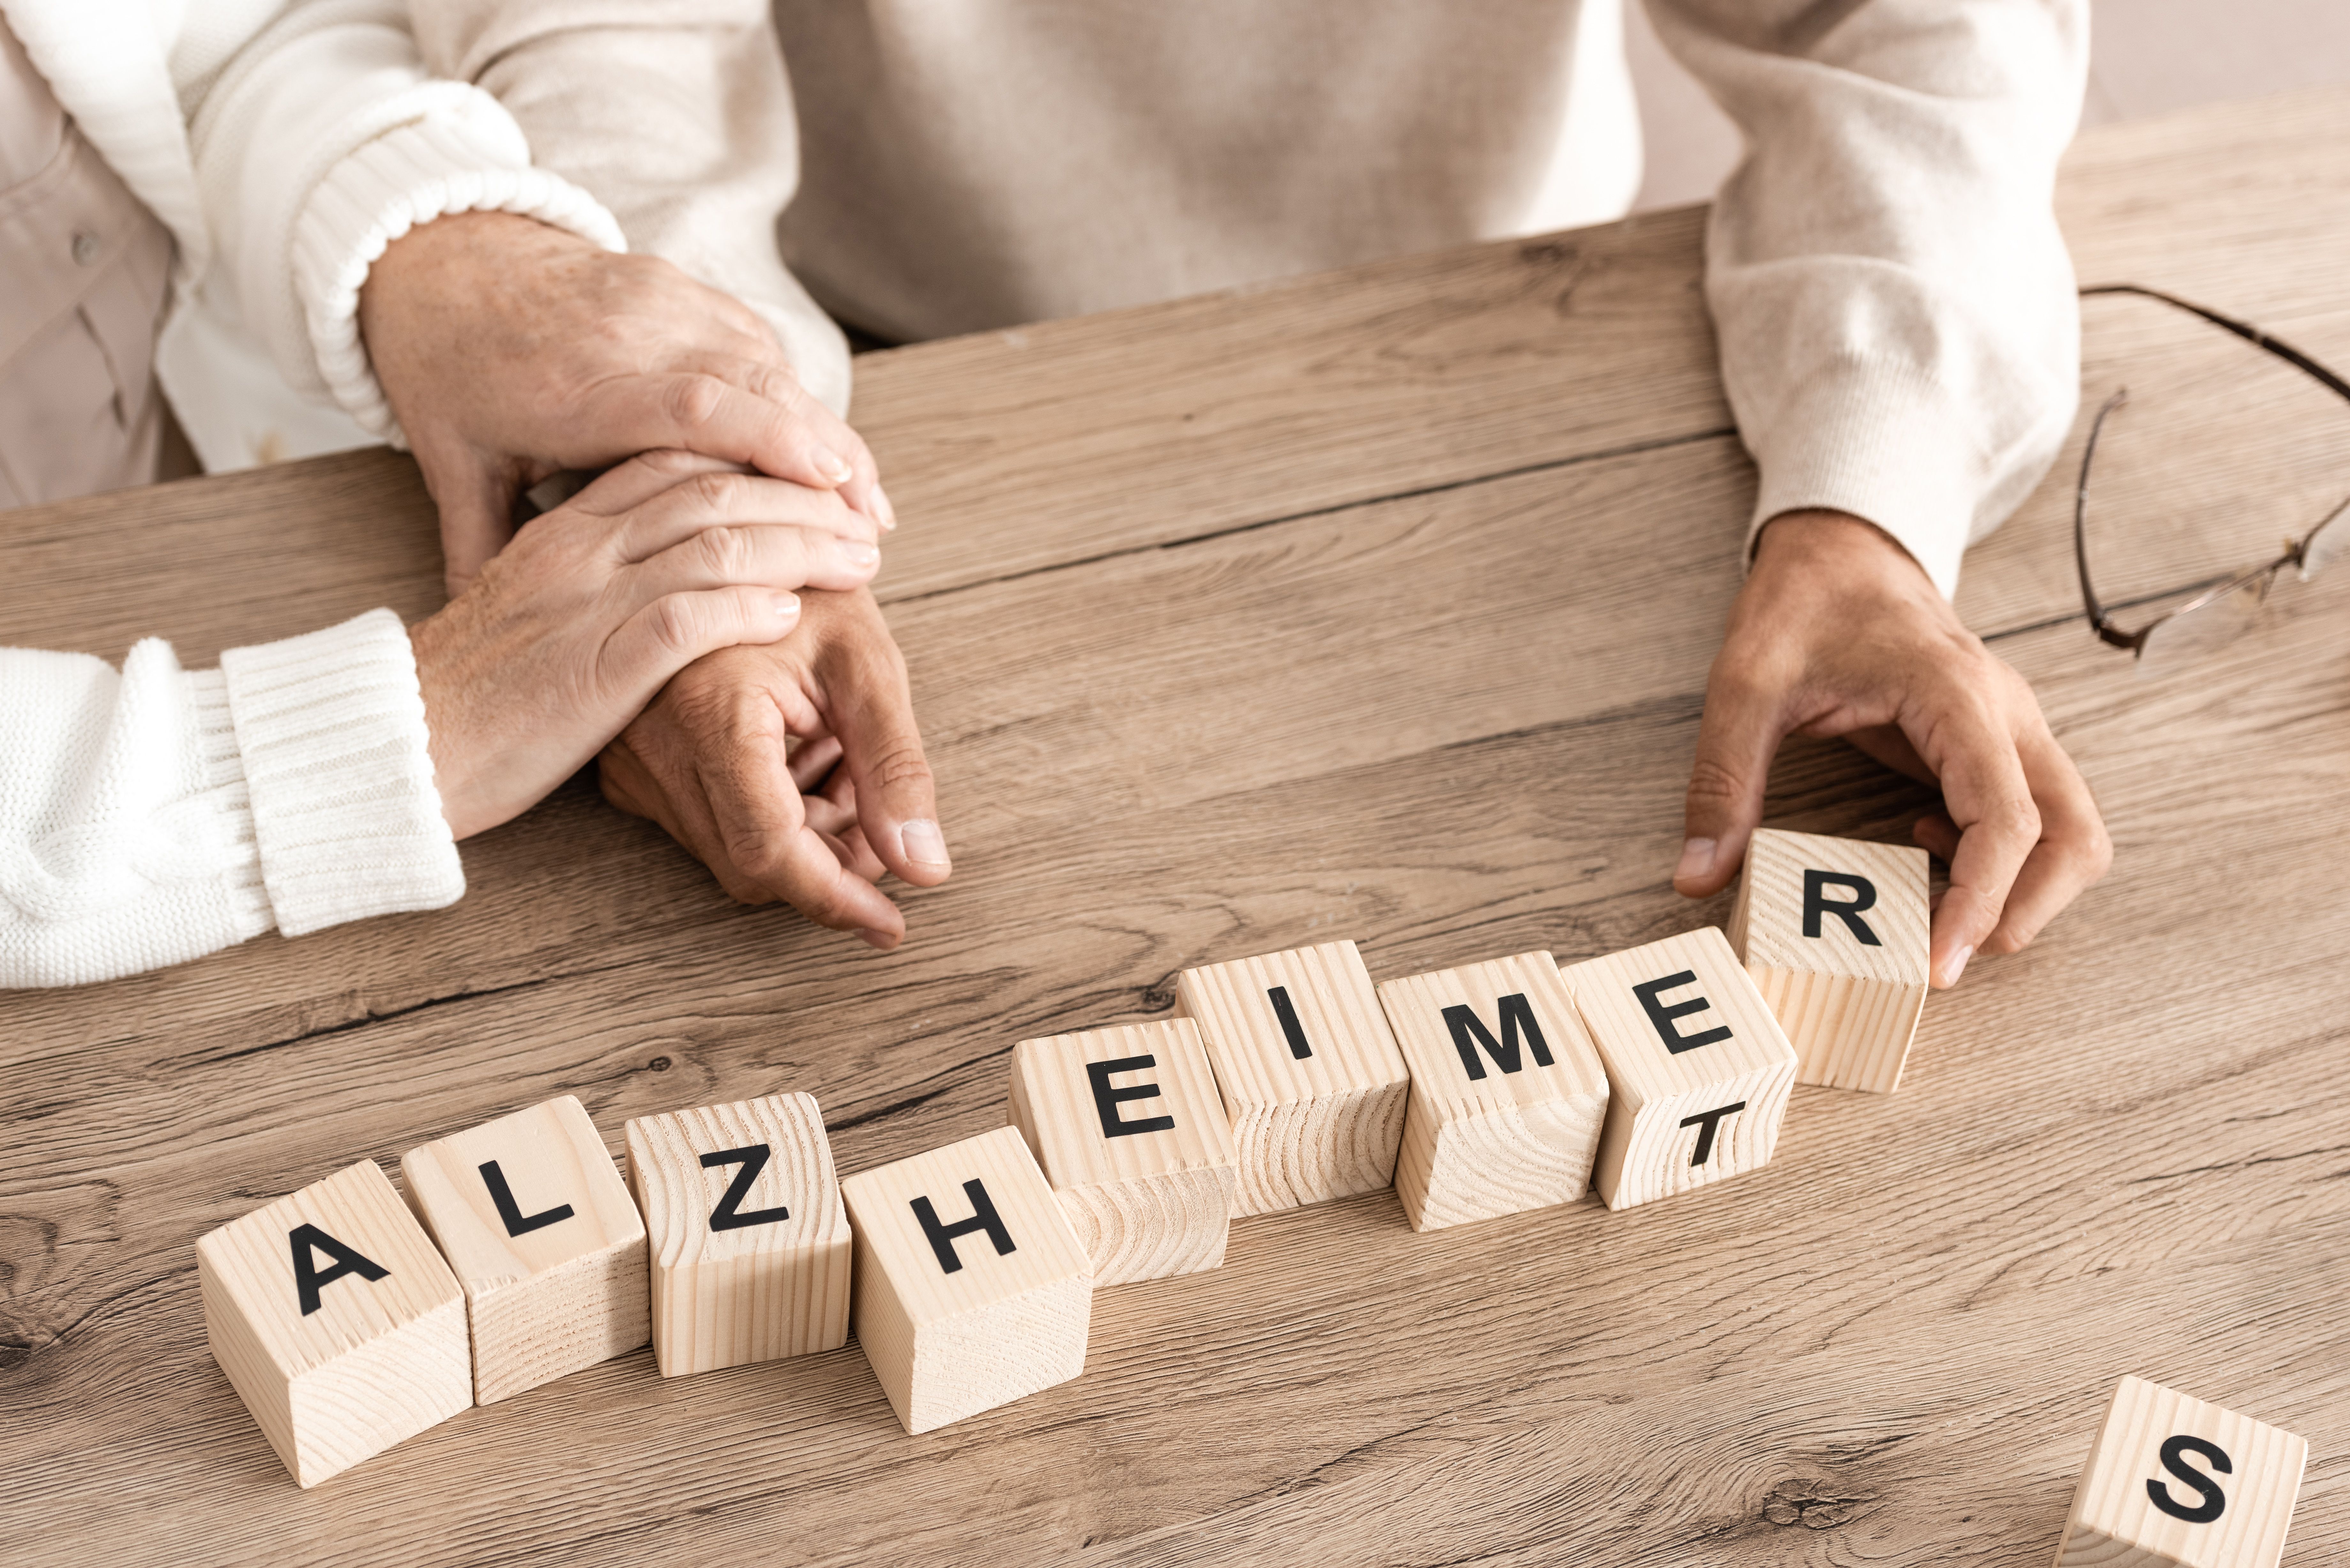 La vacuna candidata se muestra prometedora para frenar el deterioro cognitivo en la enfermedad de Alzheimer leve